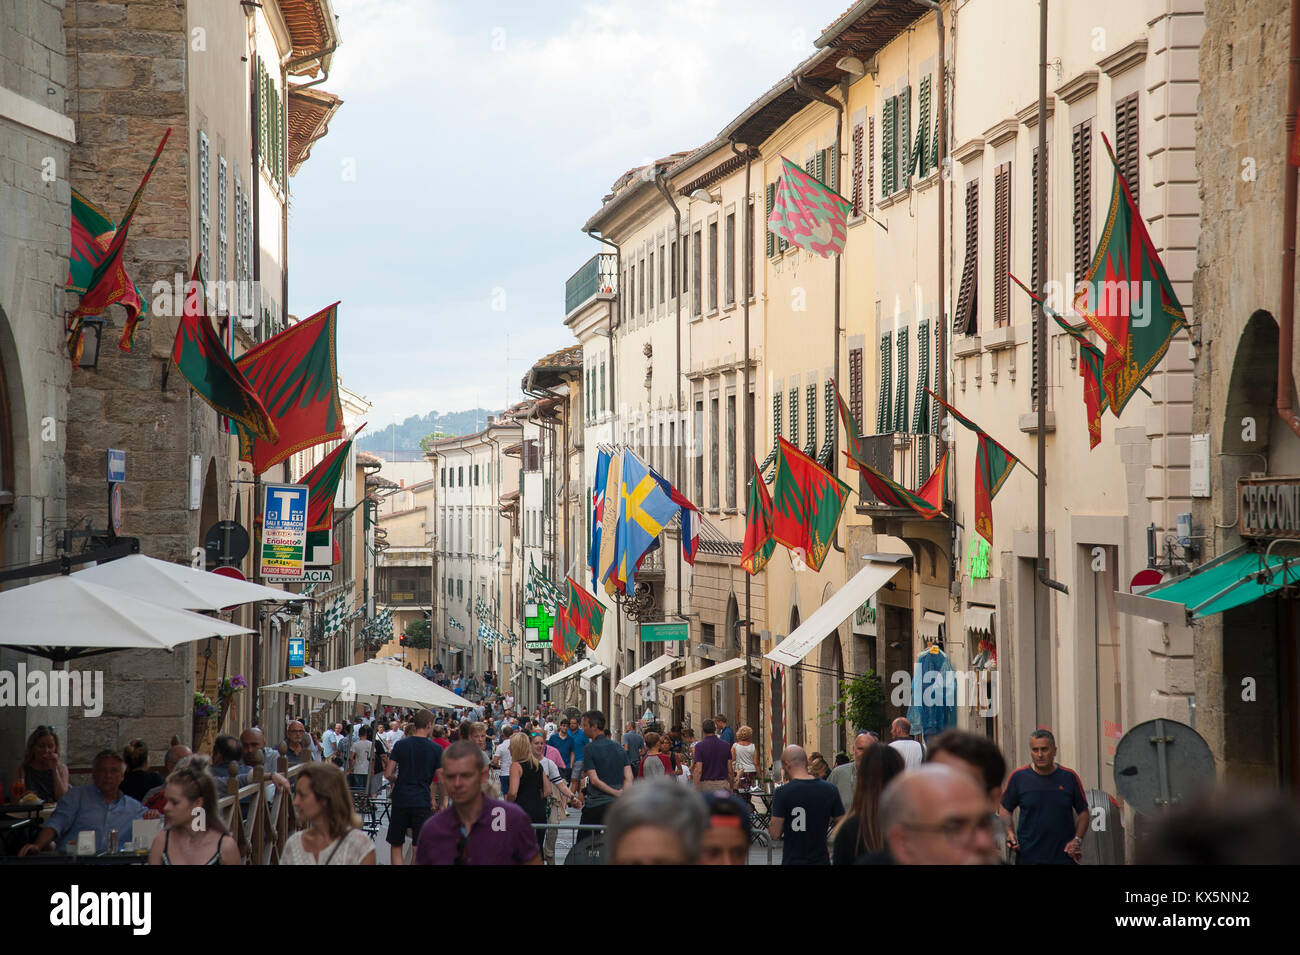 Corso Italia in Historic Centre of Arezzo, Tuscany, Italy. 5 August 2016 © Wojciech Strozyk / Alamy Stock Photo Stock Photo